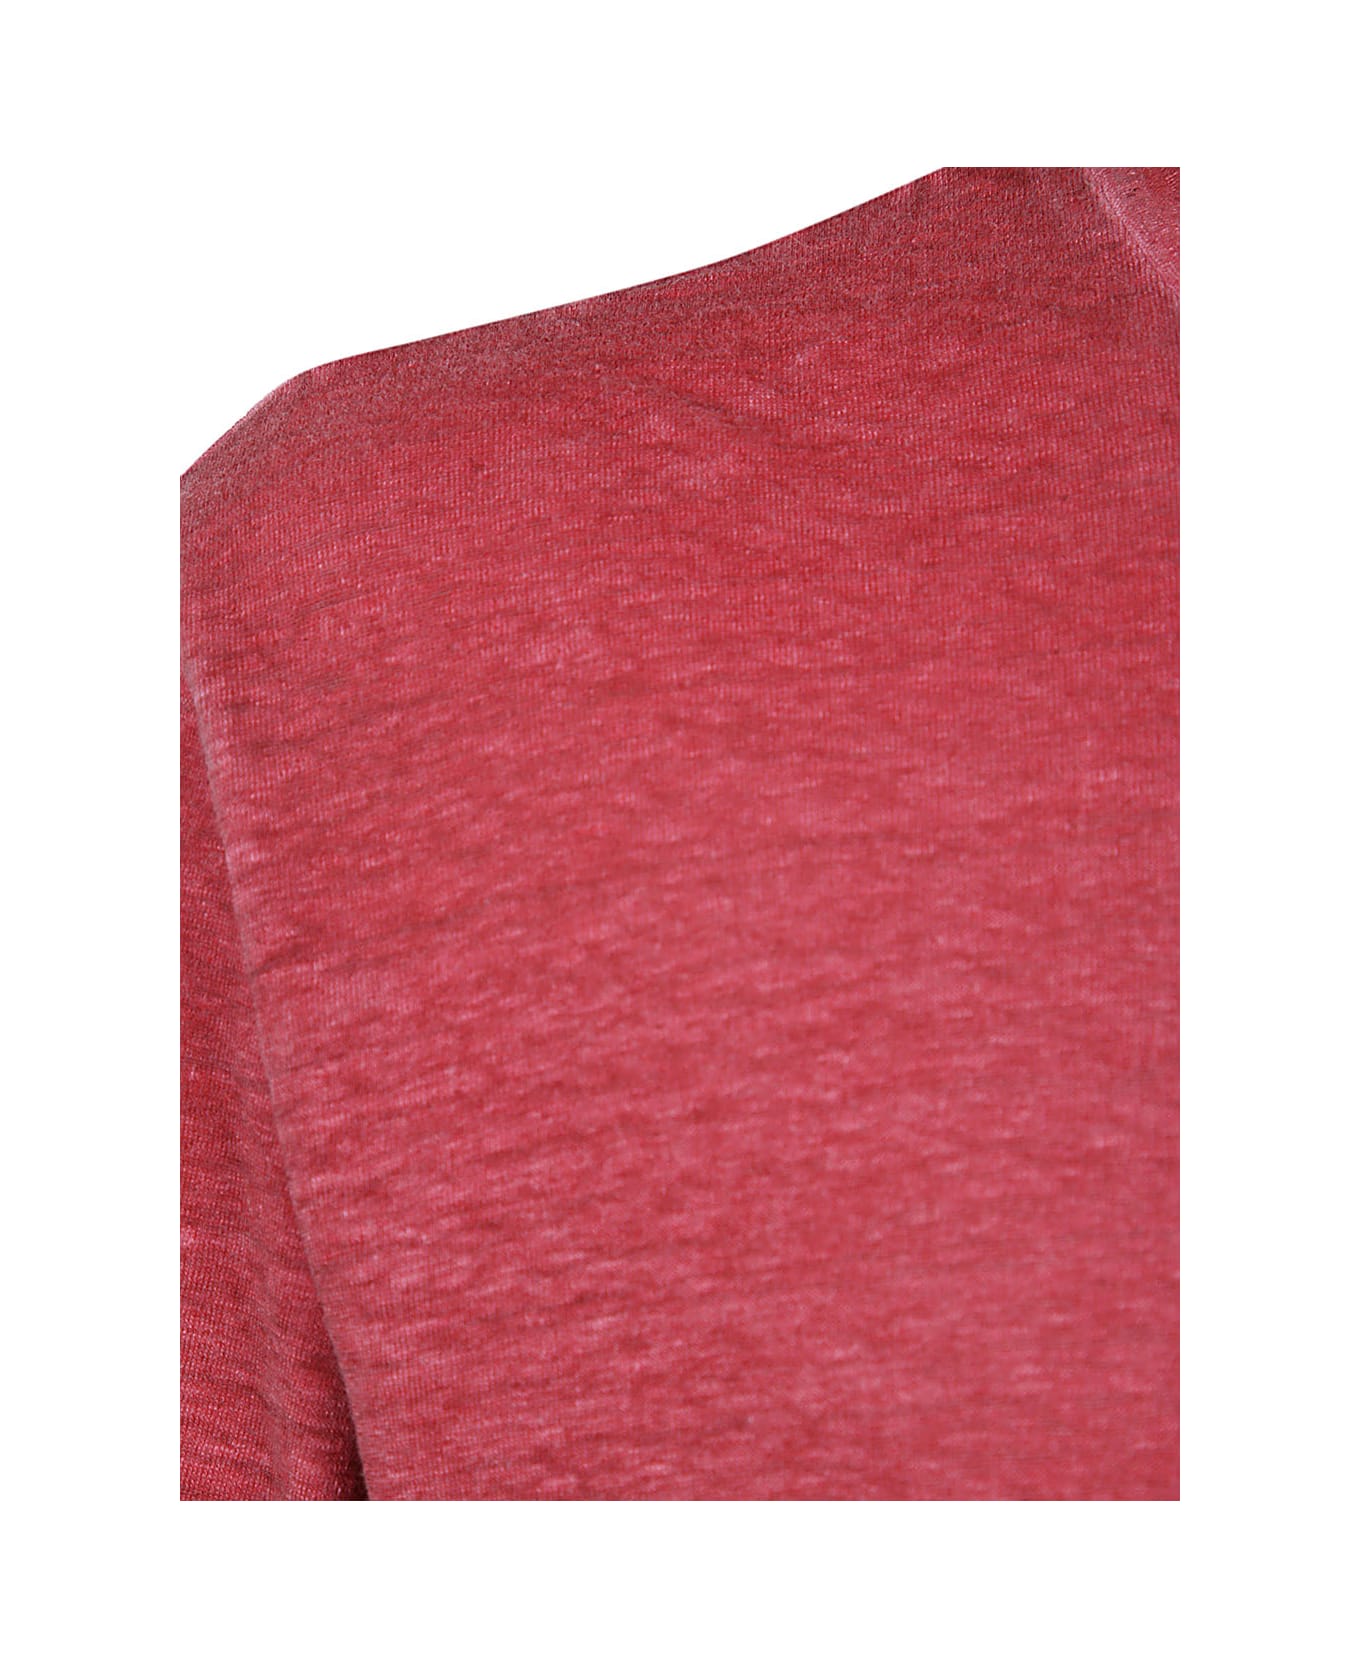 MD75 Linen T-shirt - Basic Red